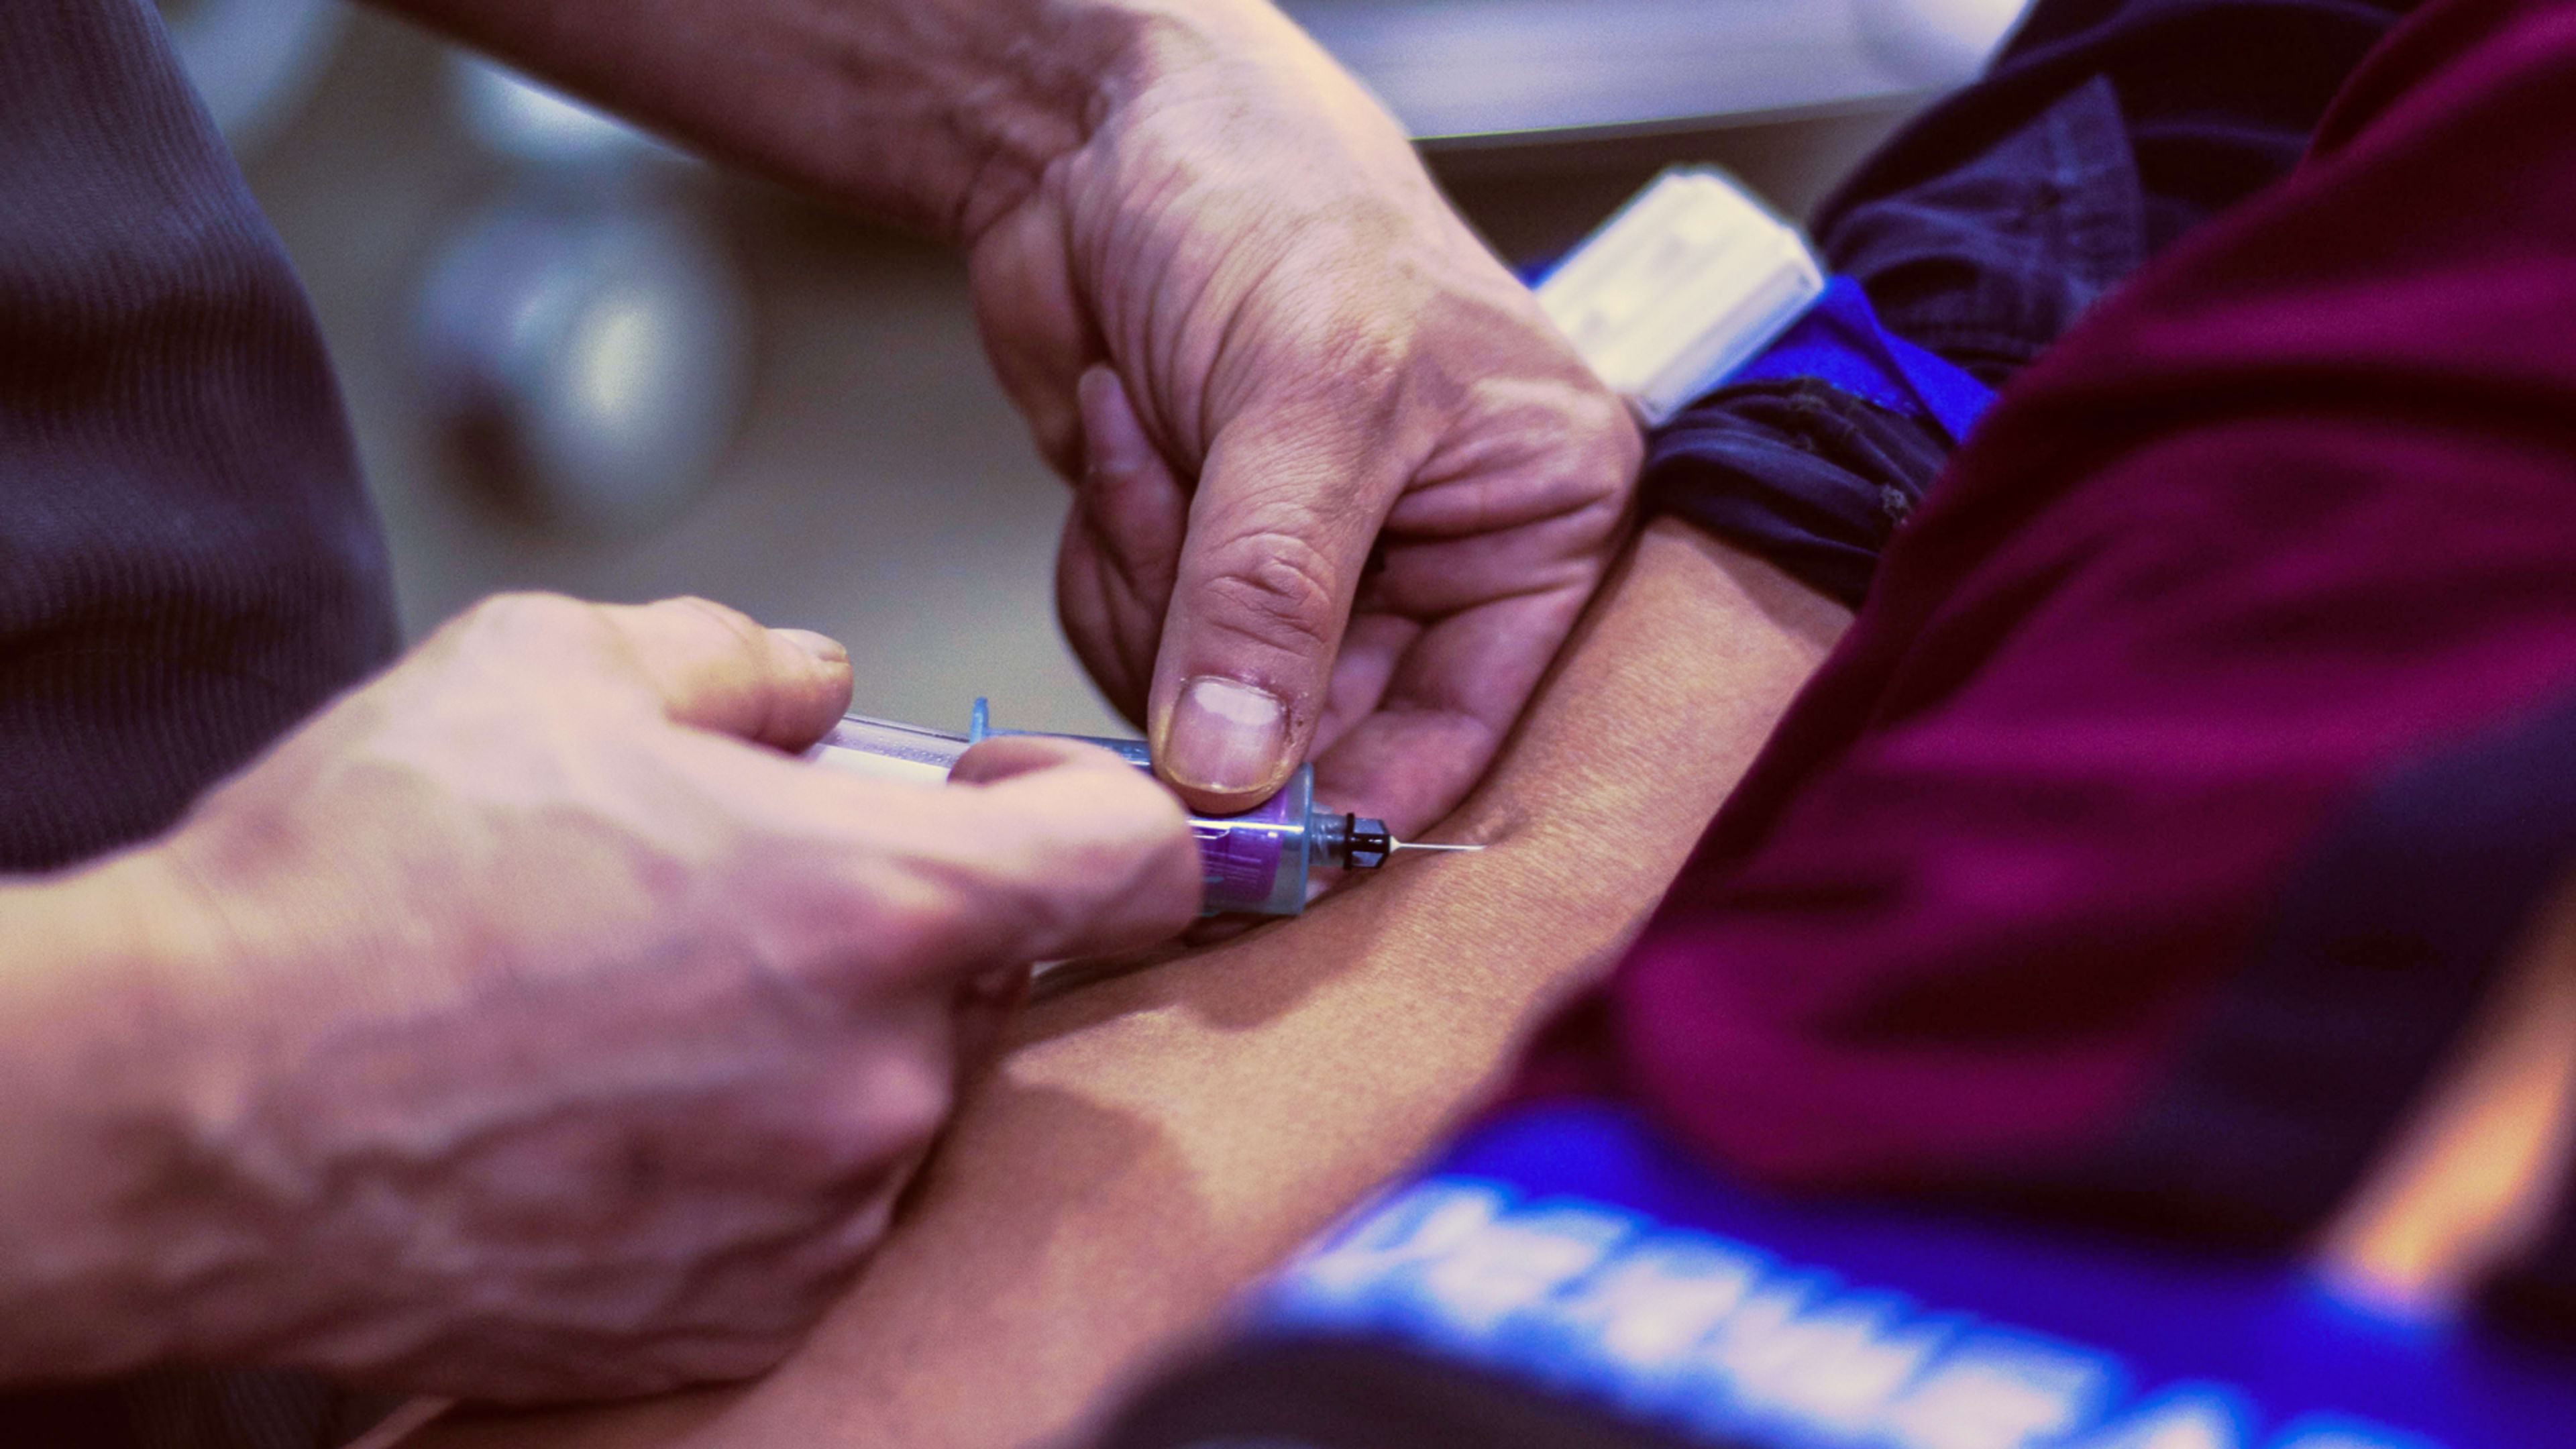 Instagram is cracking down on vaccine misinformation